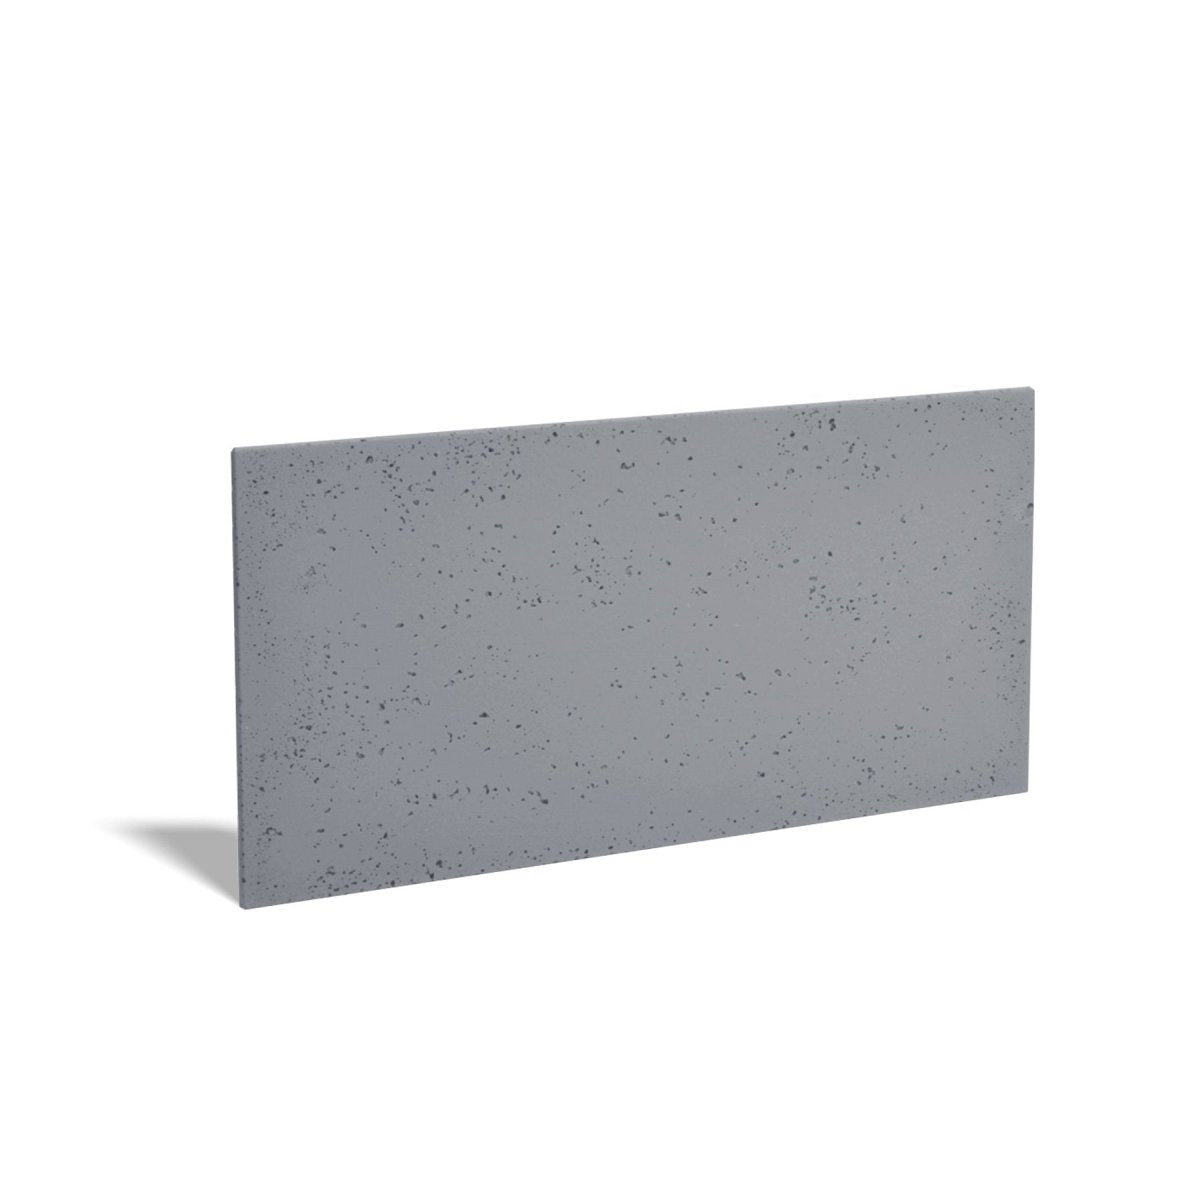 Concrete Wall Panel INTERIOR - 100 x 50 cm - DecorMania.eu